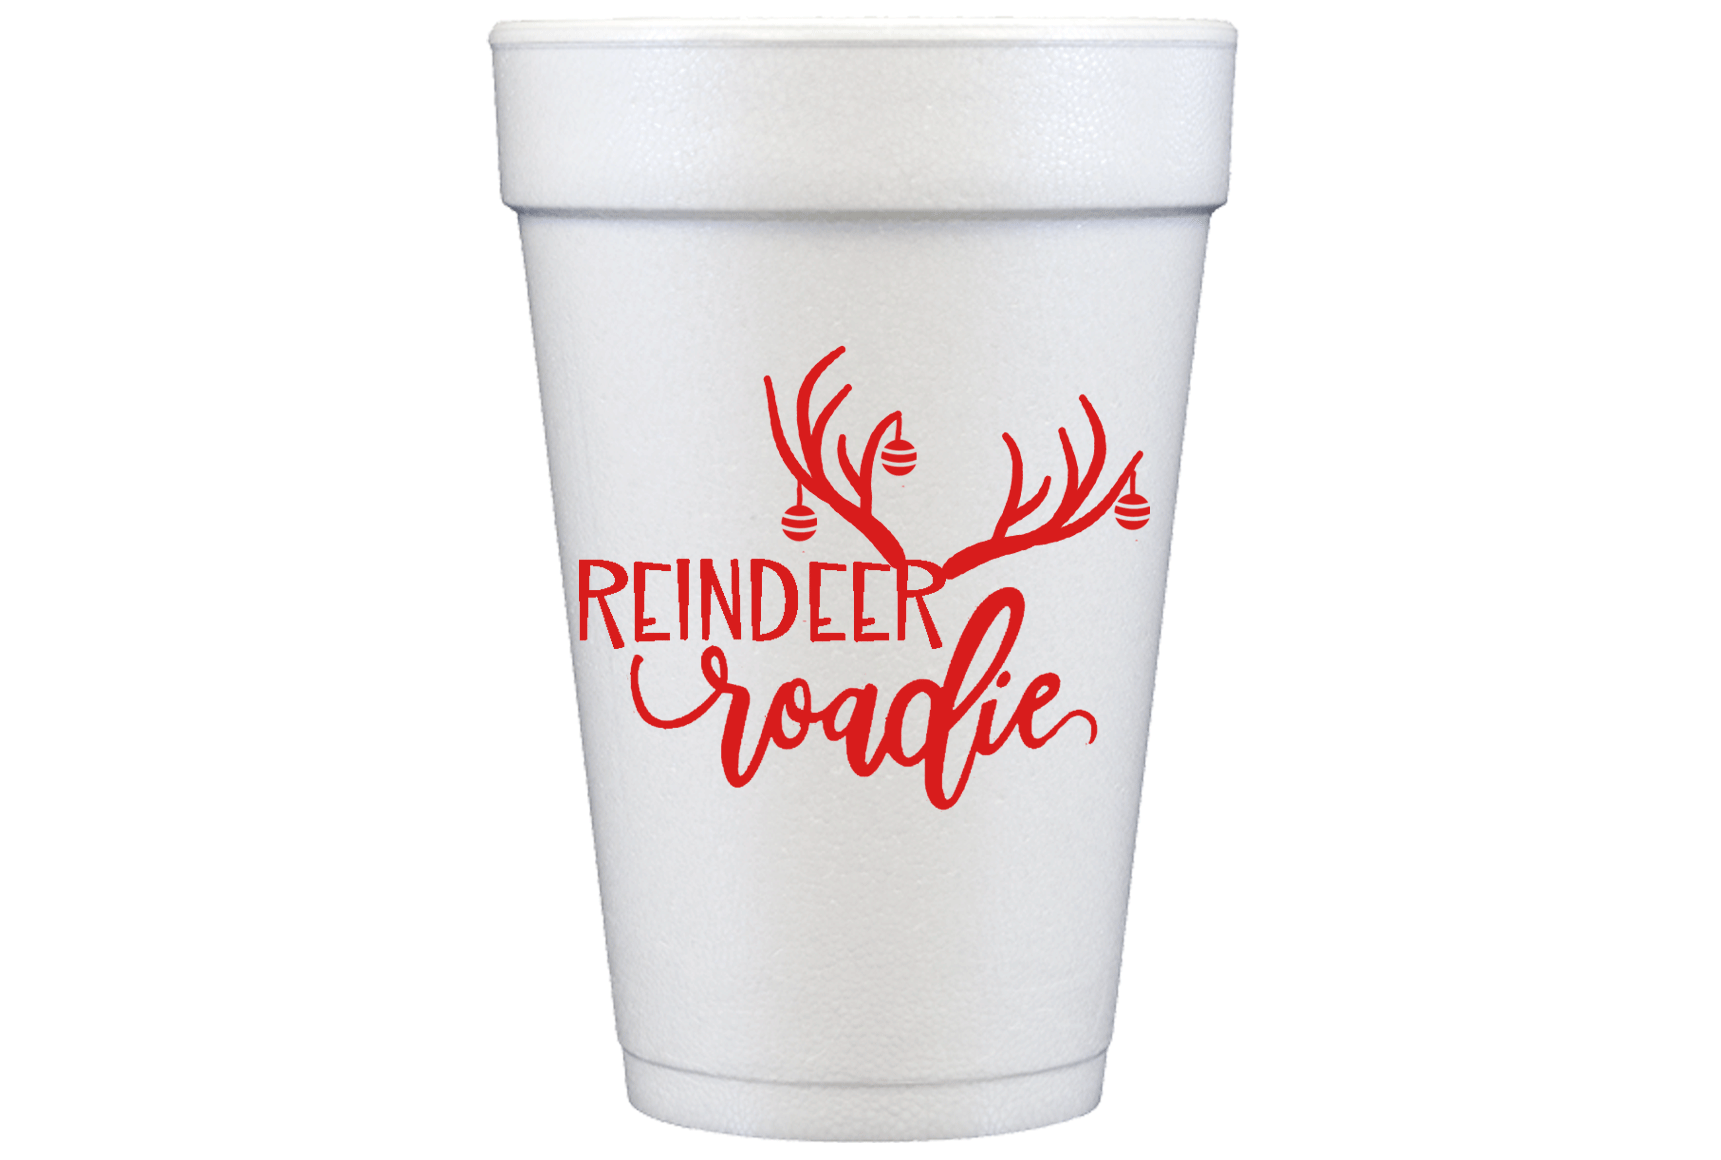 https://www.twofunnygirls.com/wp-content/uploads/2020/05/Reindeer-Roadie-Foam-Christmas-Cup-1700.png